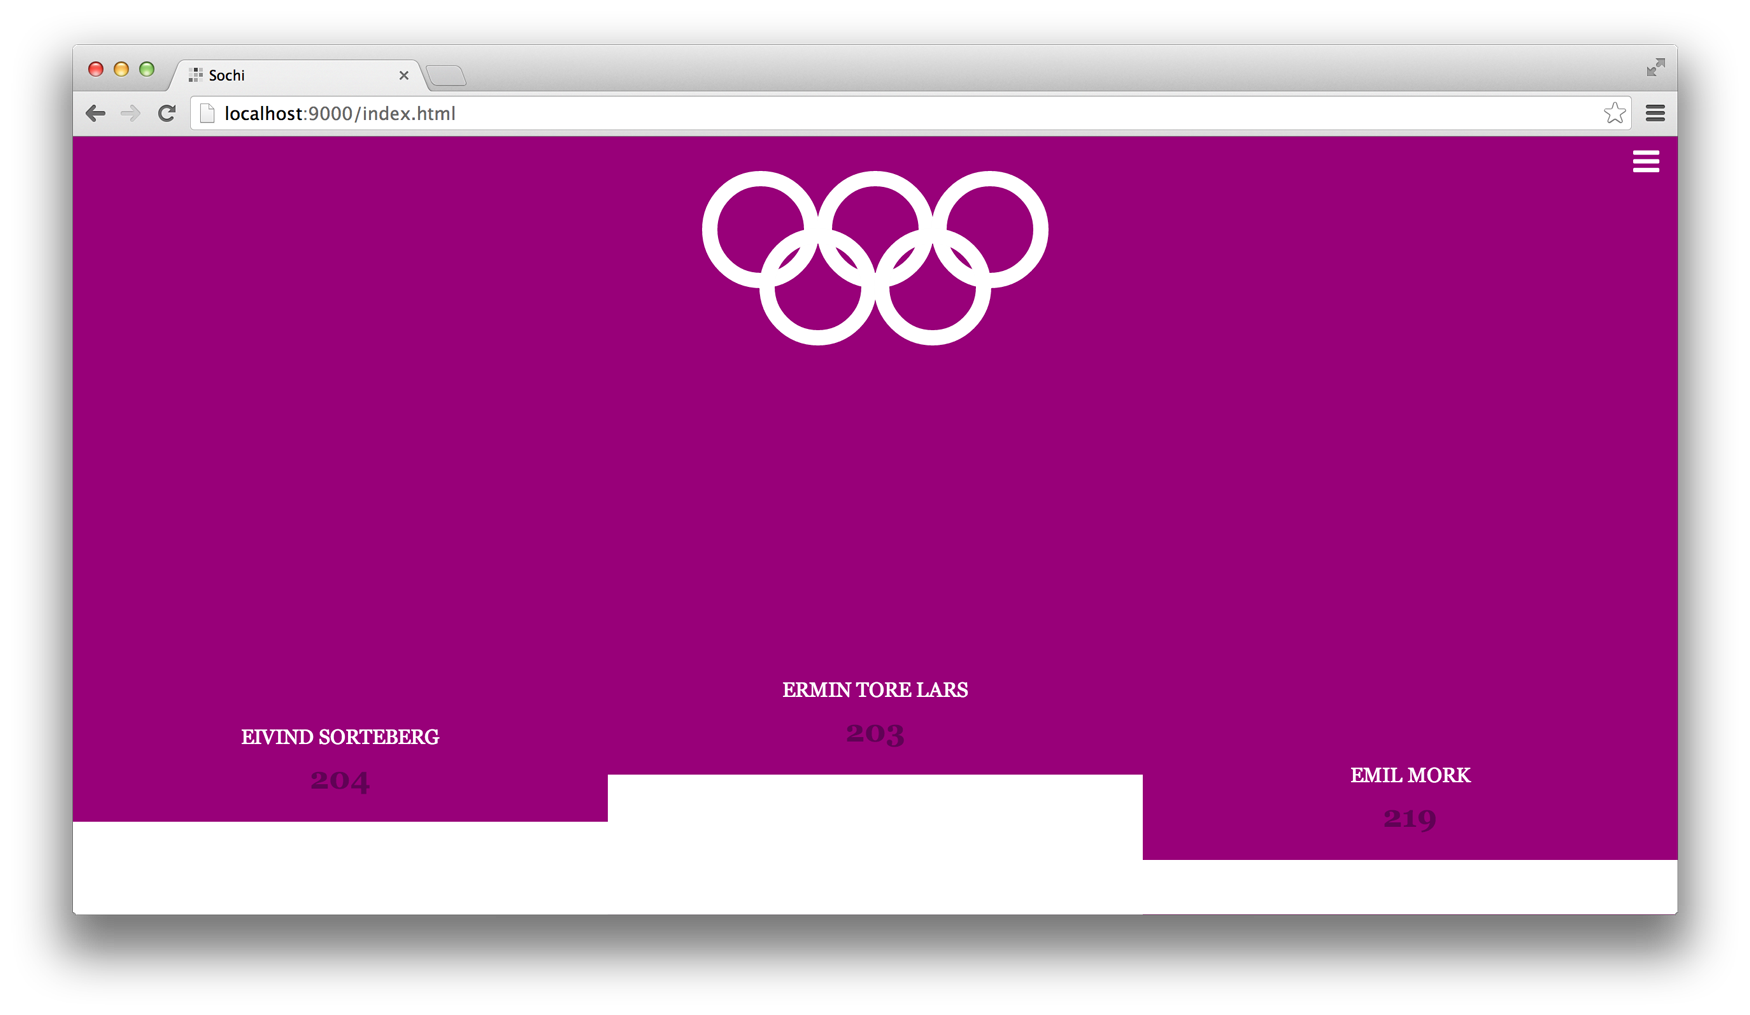 Harp Sochi Tipping app by @torgeir